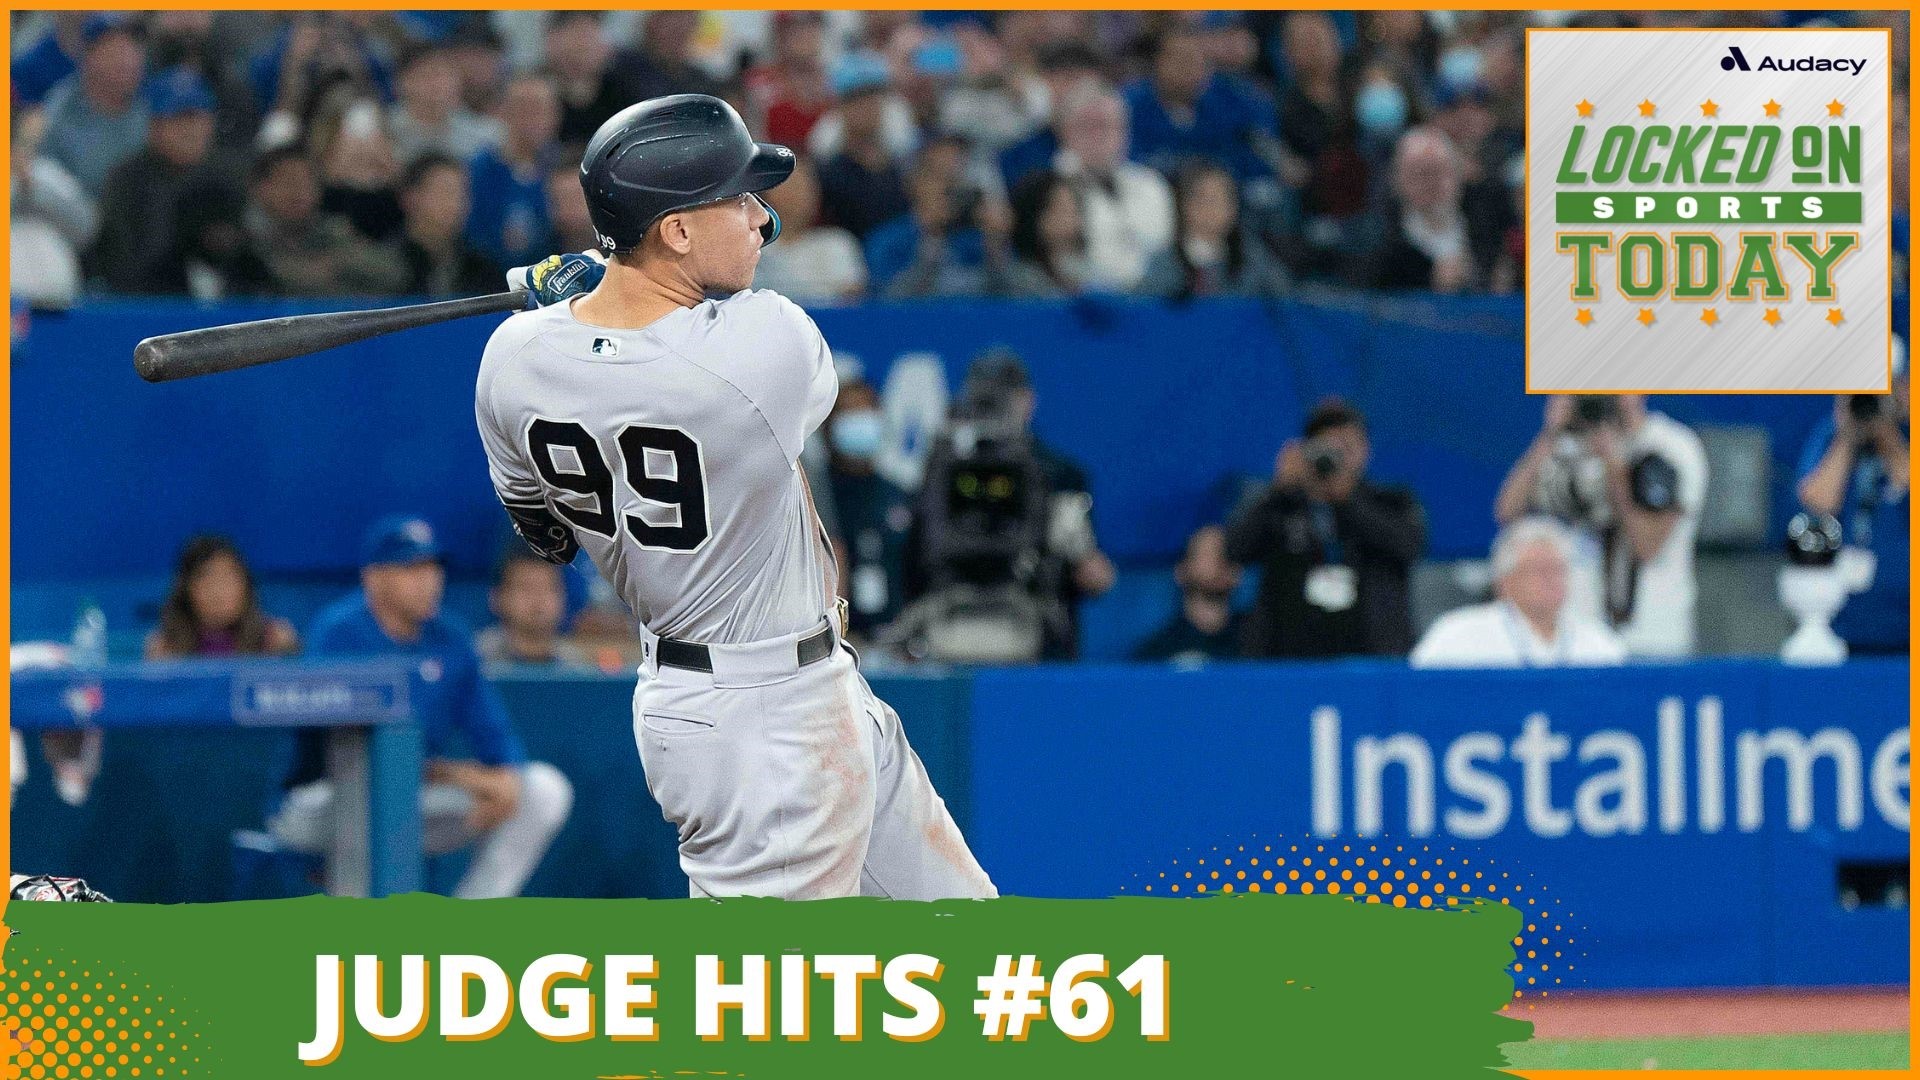 Yankees v Rangers: Did Aaron Judge hit a 62nd home run?, Update